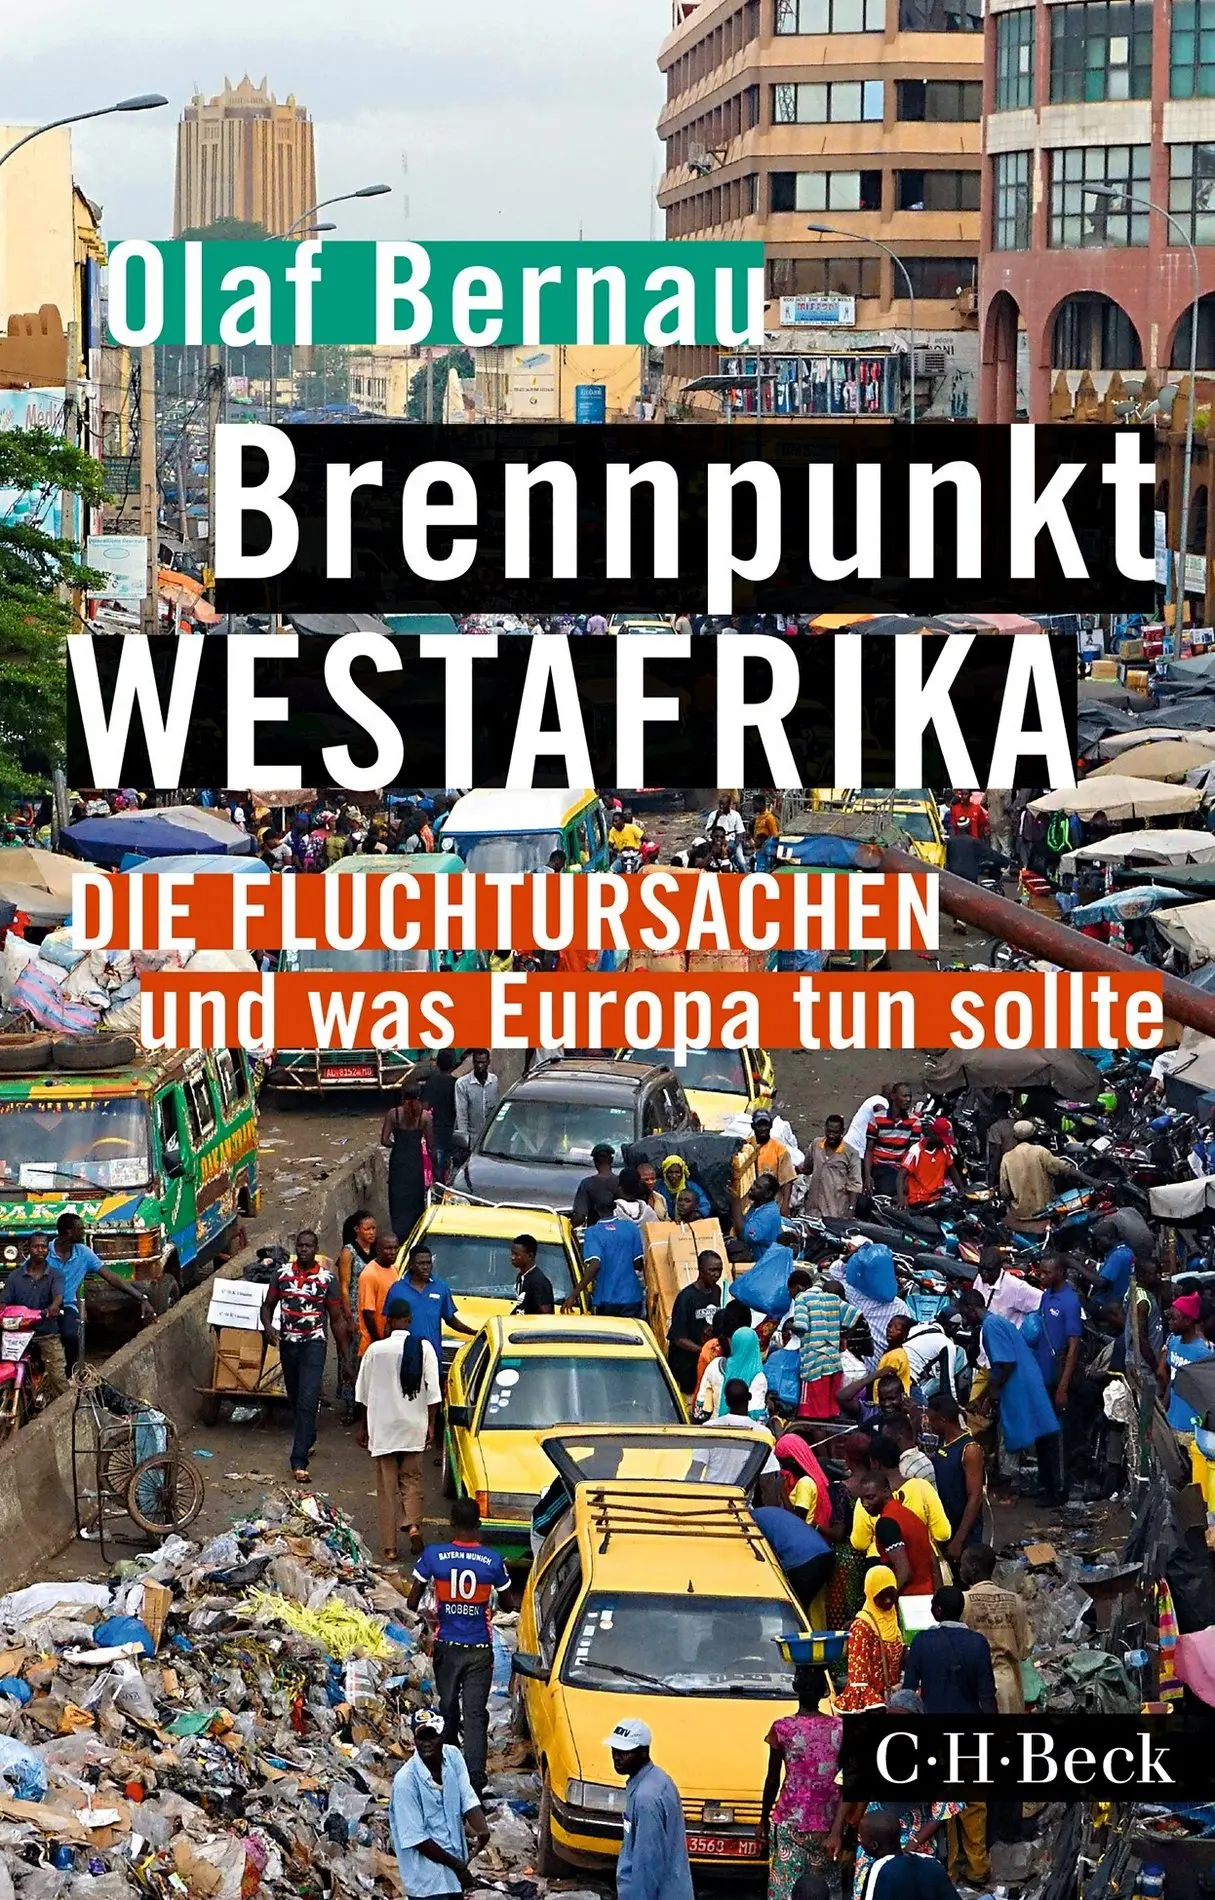 Buchcover "Brennpunkt Westafrika" von Olaf Bernau